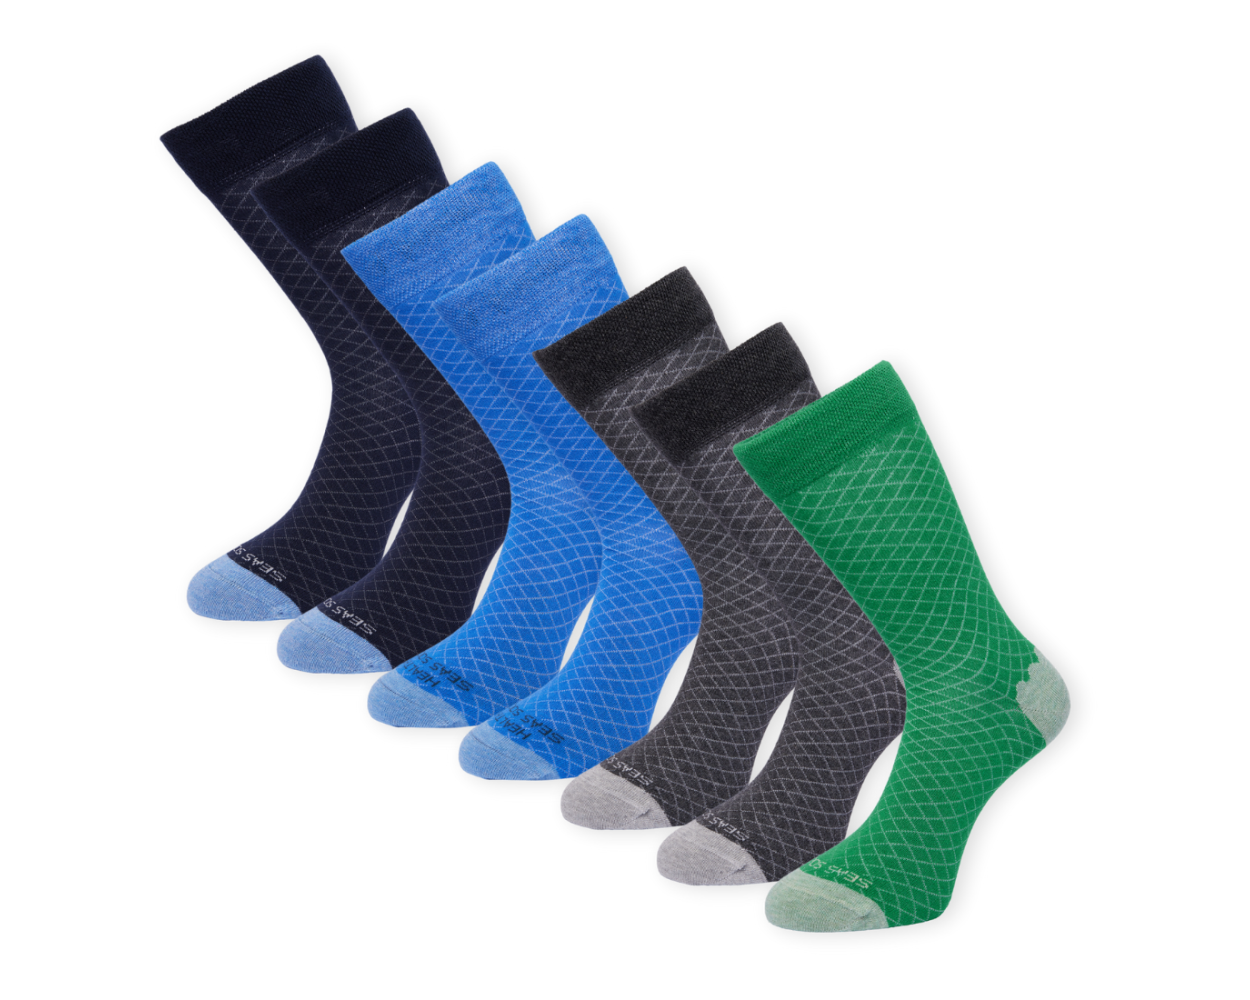 Buy colourful socks 7-pack at Forebel.com